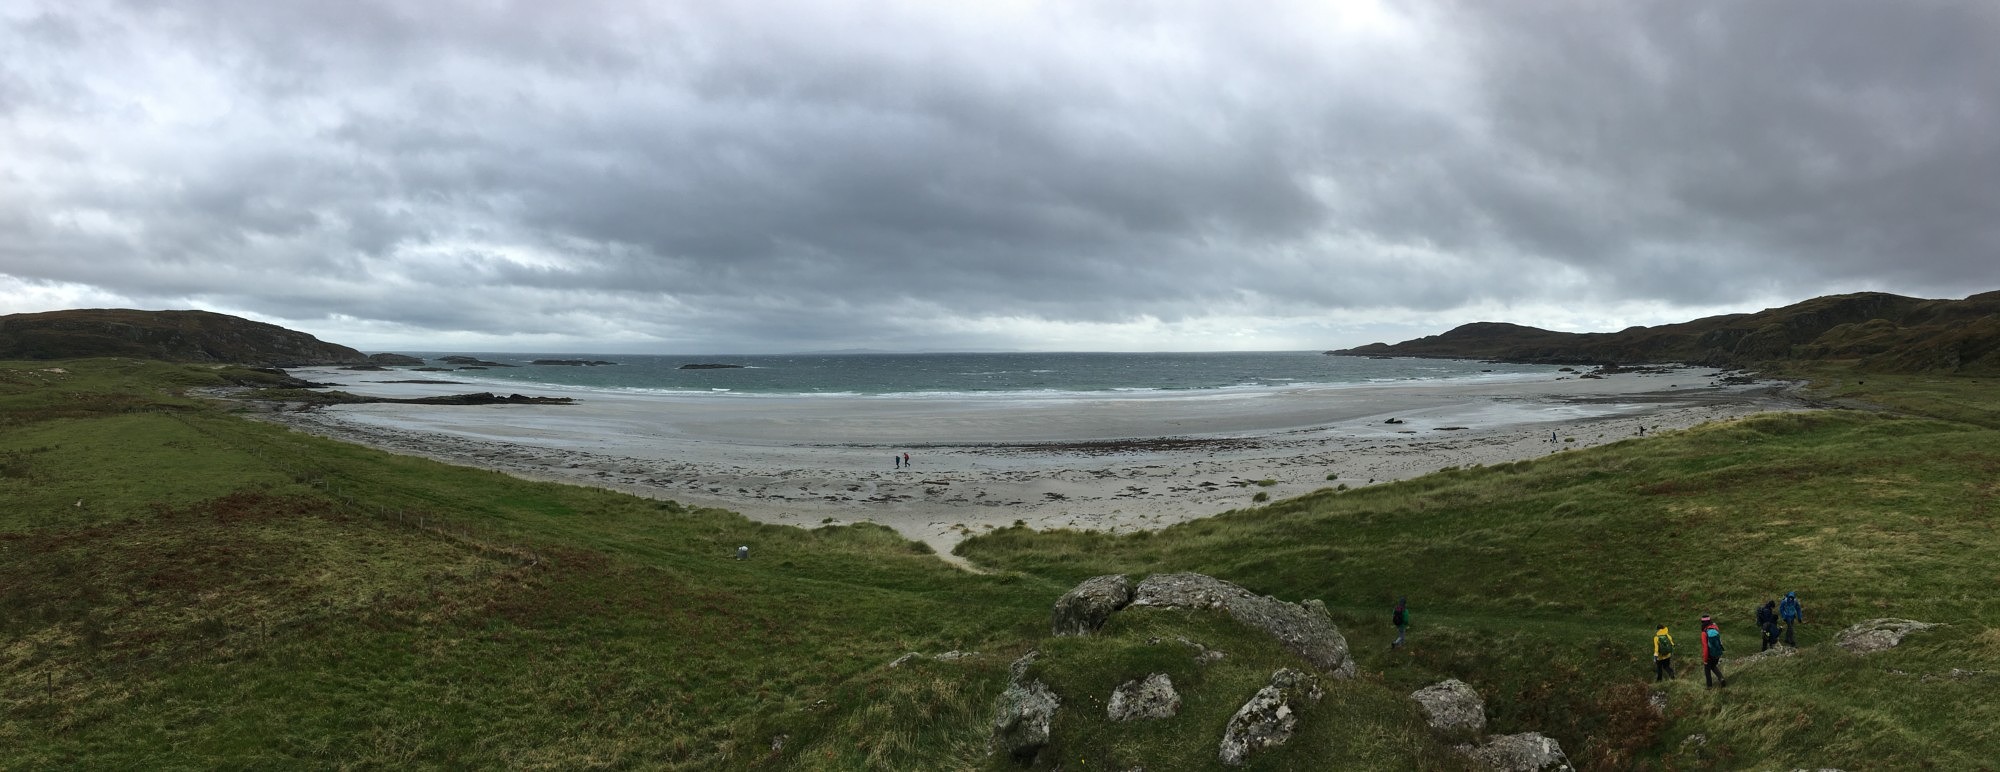 Ardalanish Bay - Schottland 2017